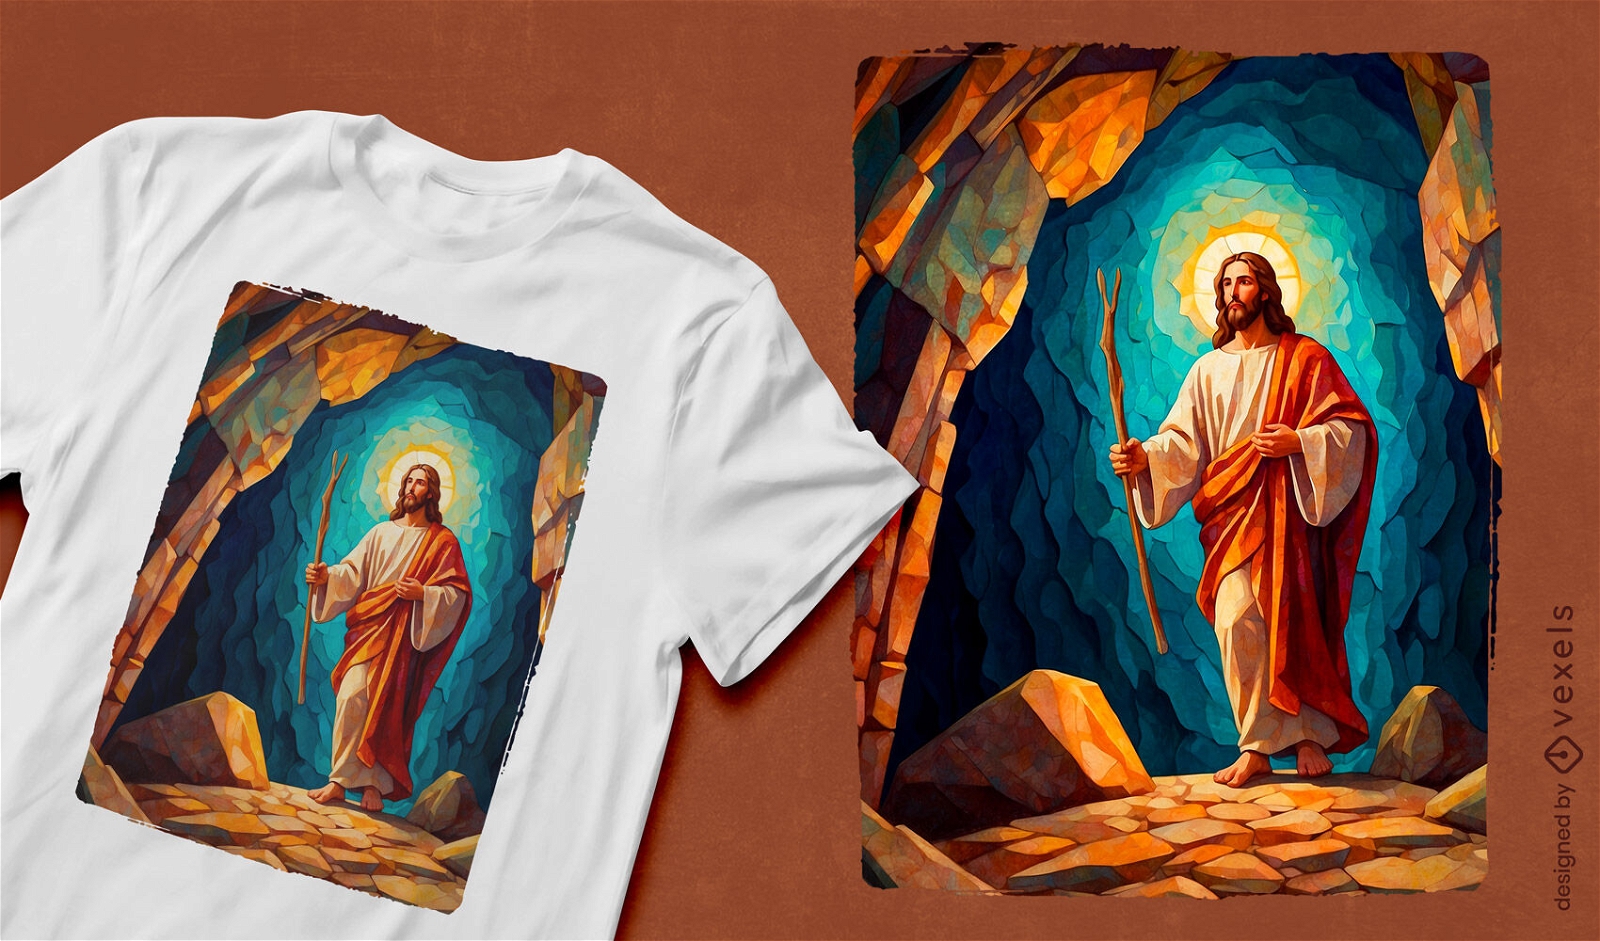 Jesus Christ scene portrait t-shirt design